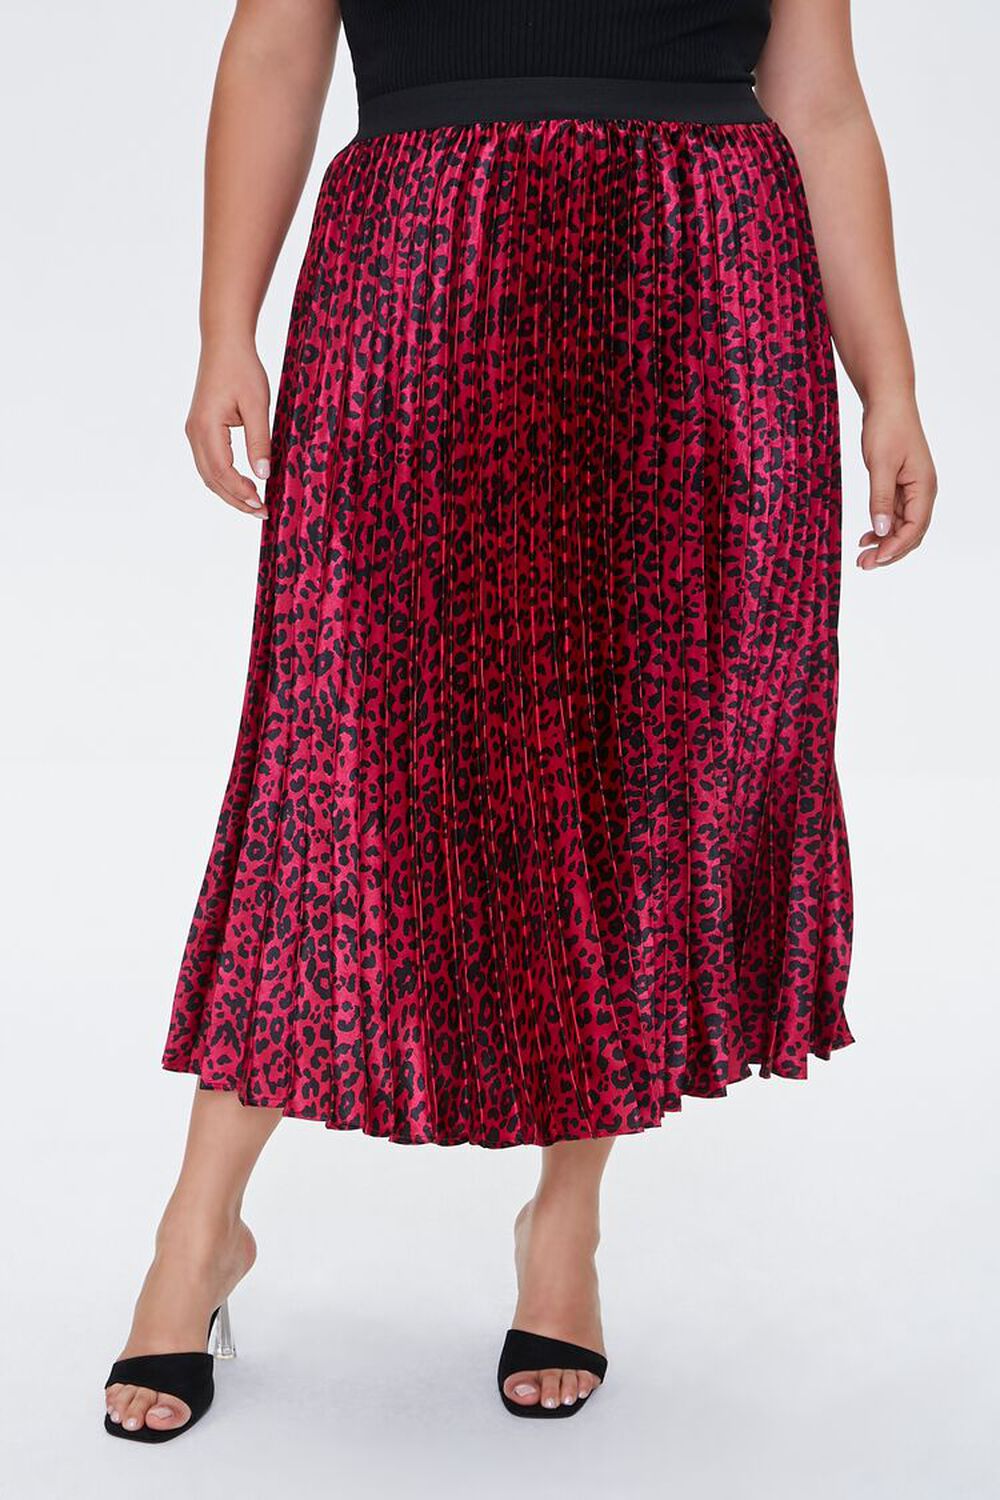 WINE/BLACK Plus Size Leopard Print Midi Skirt, image 2